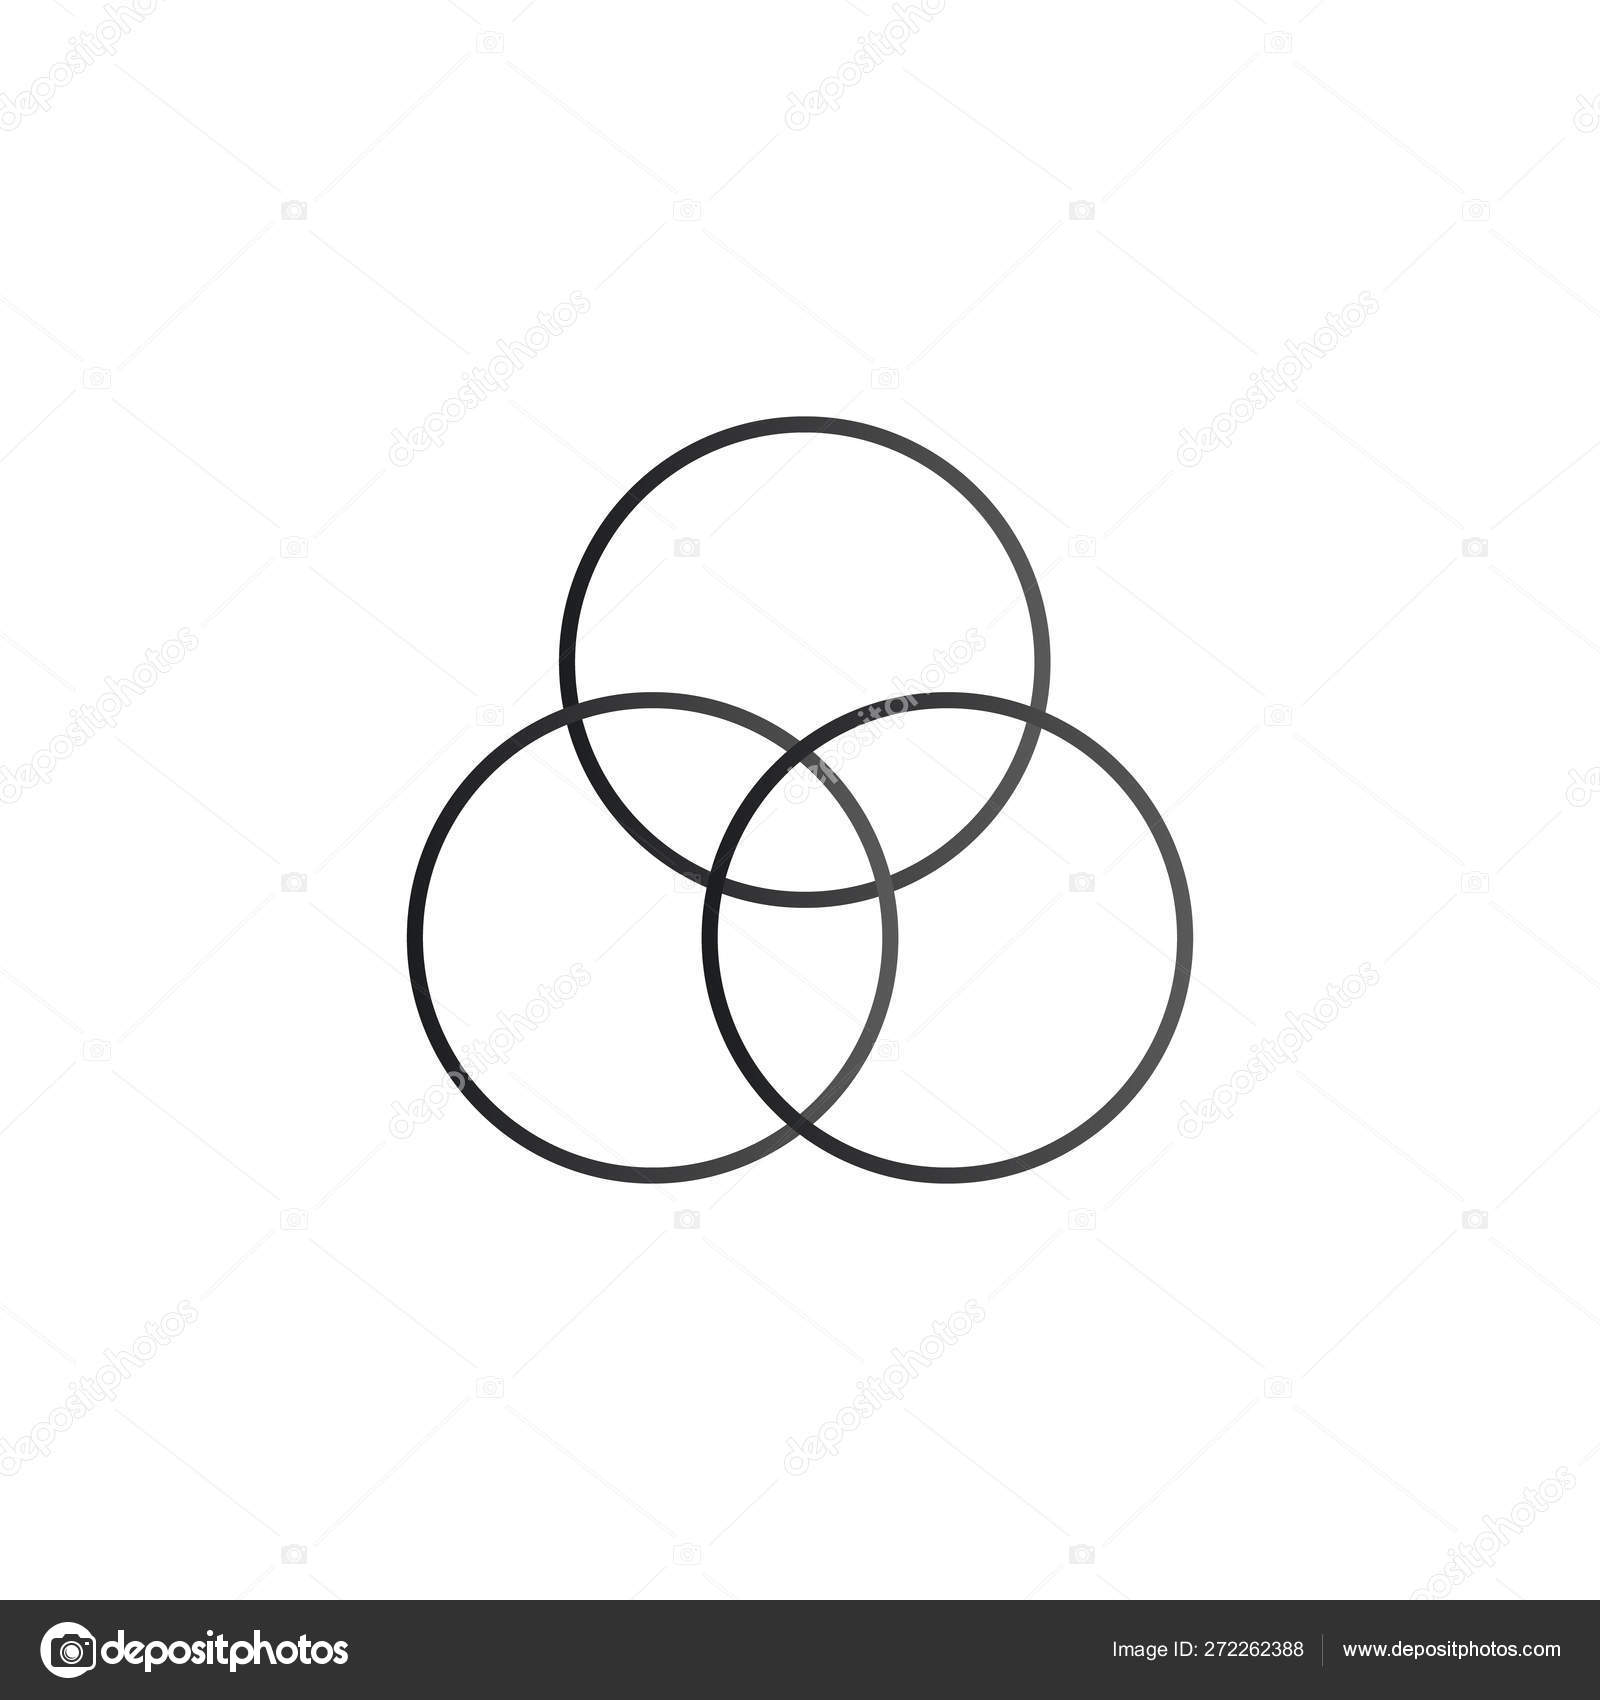 Overlapping Circle Chart